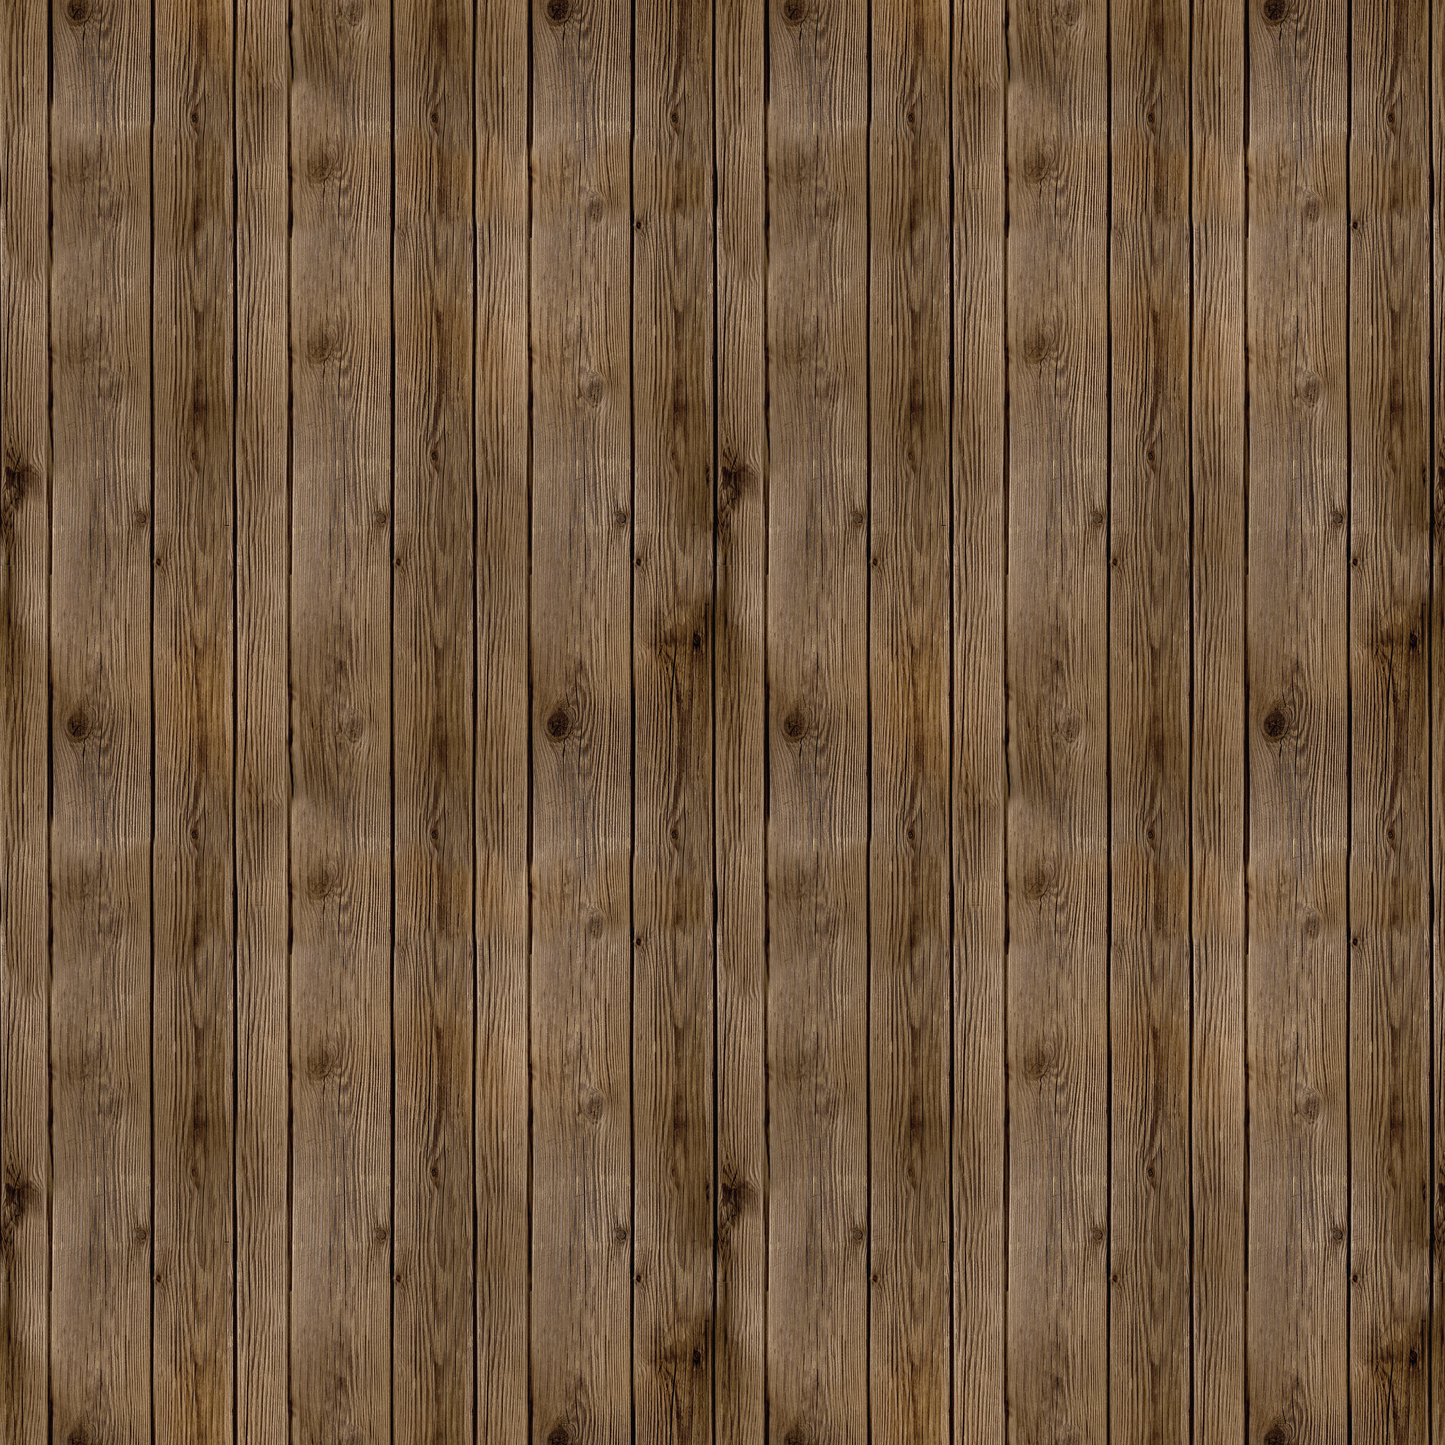 Wooden Boards 004